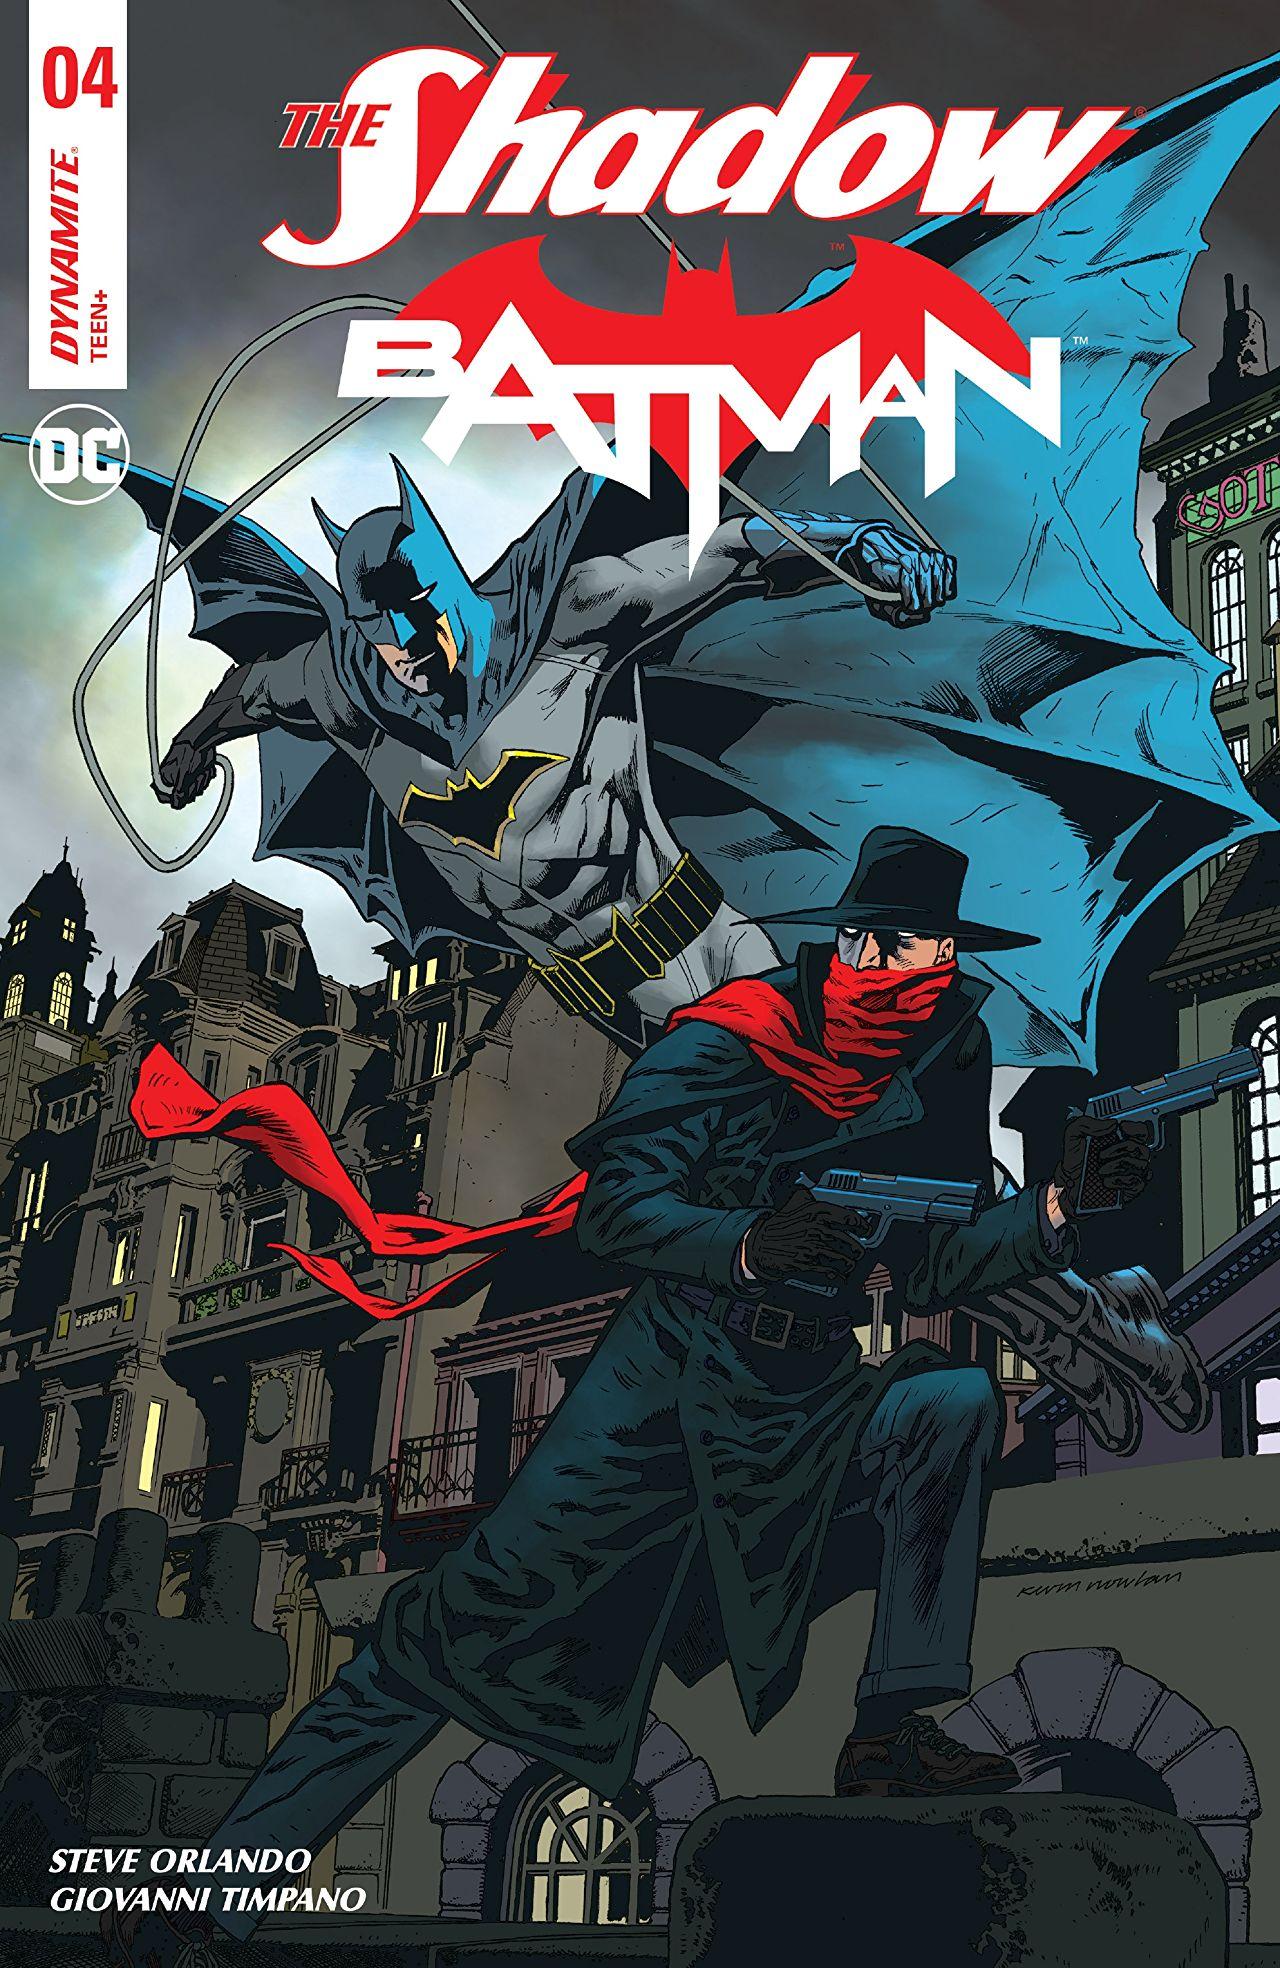 The Shadow/Batman Vol. 1 #4